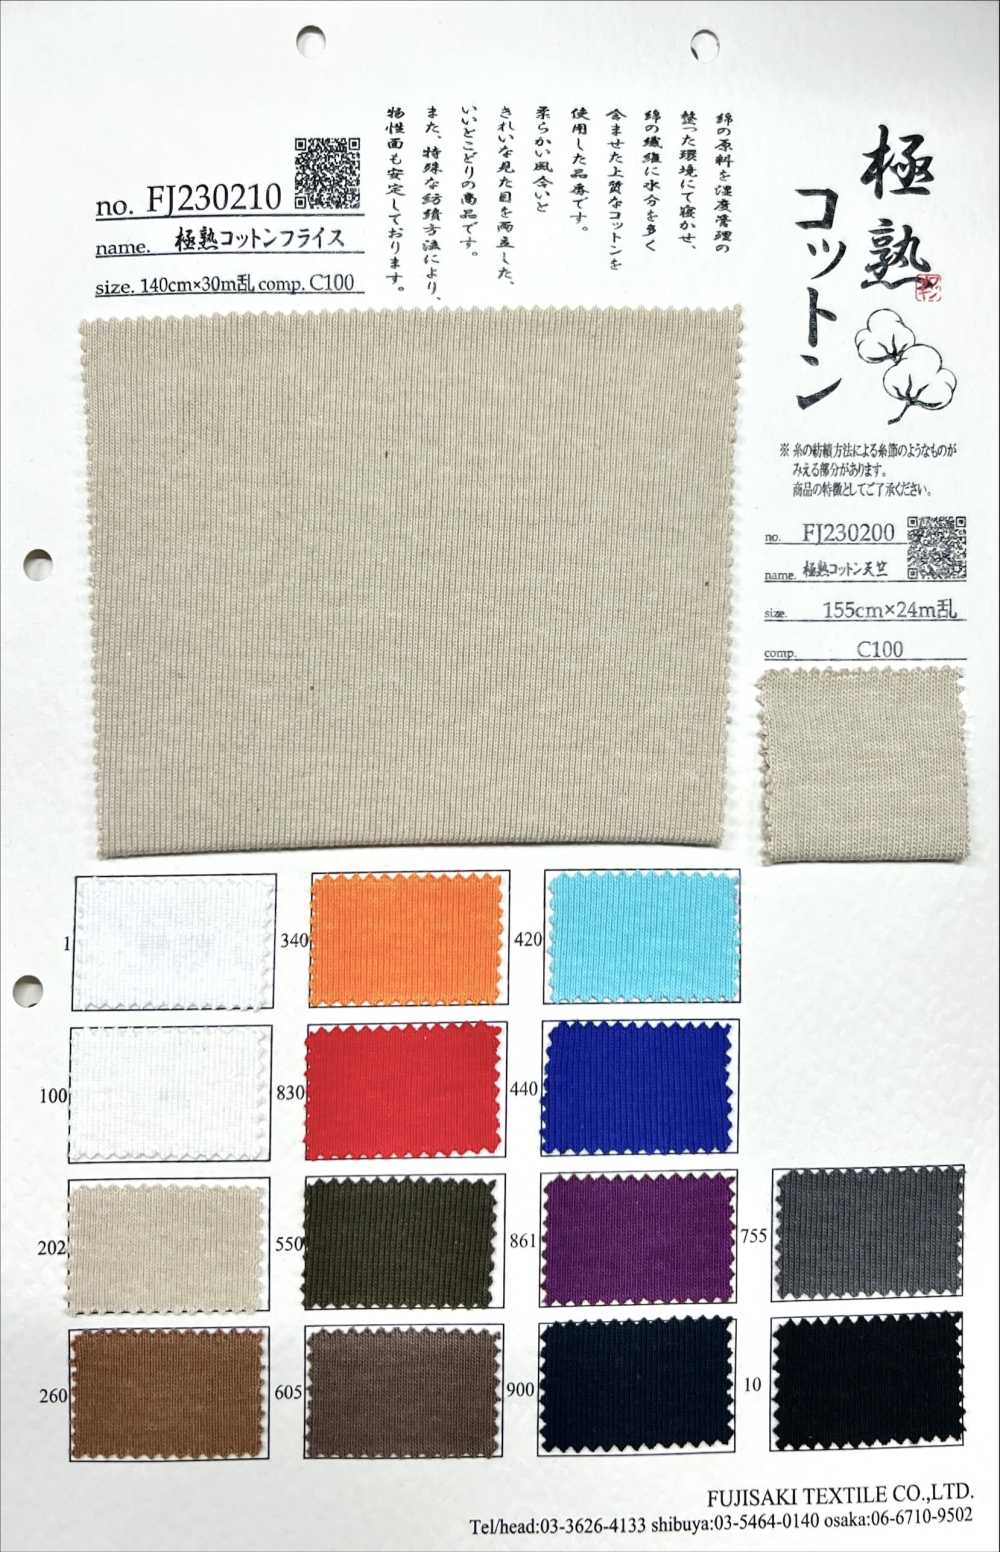 FJ230210 Extremely Mature Cotton Circular Rib[Textile / Fabric] Fujisaki Textile